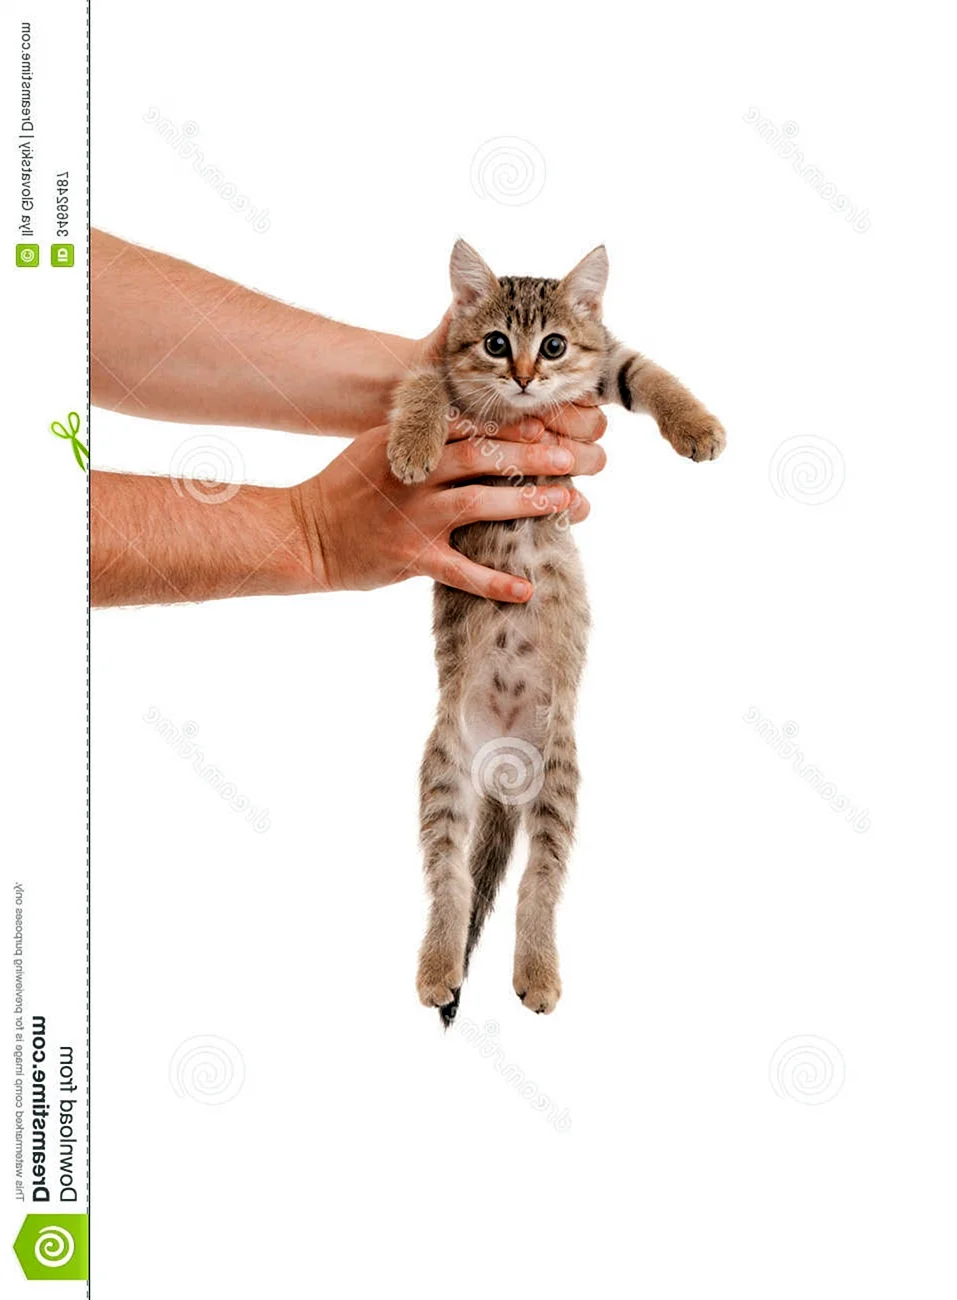 Кота держат на руках